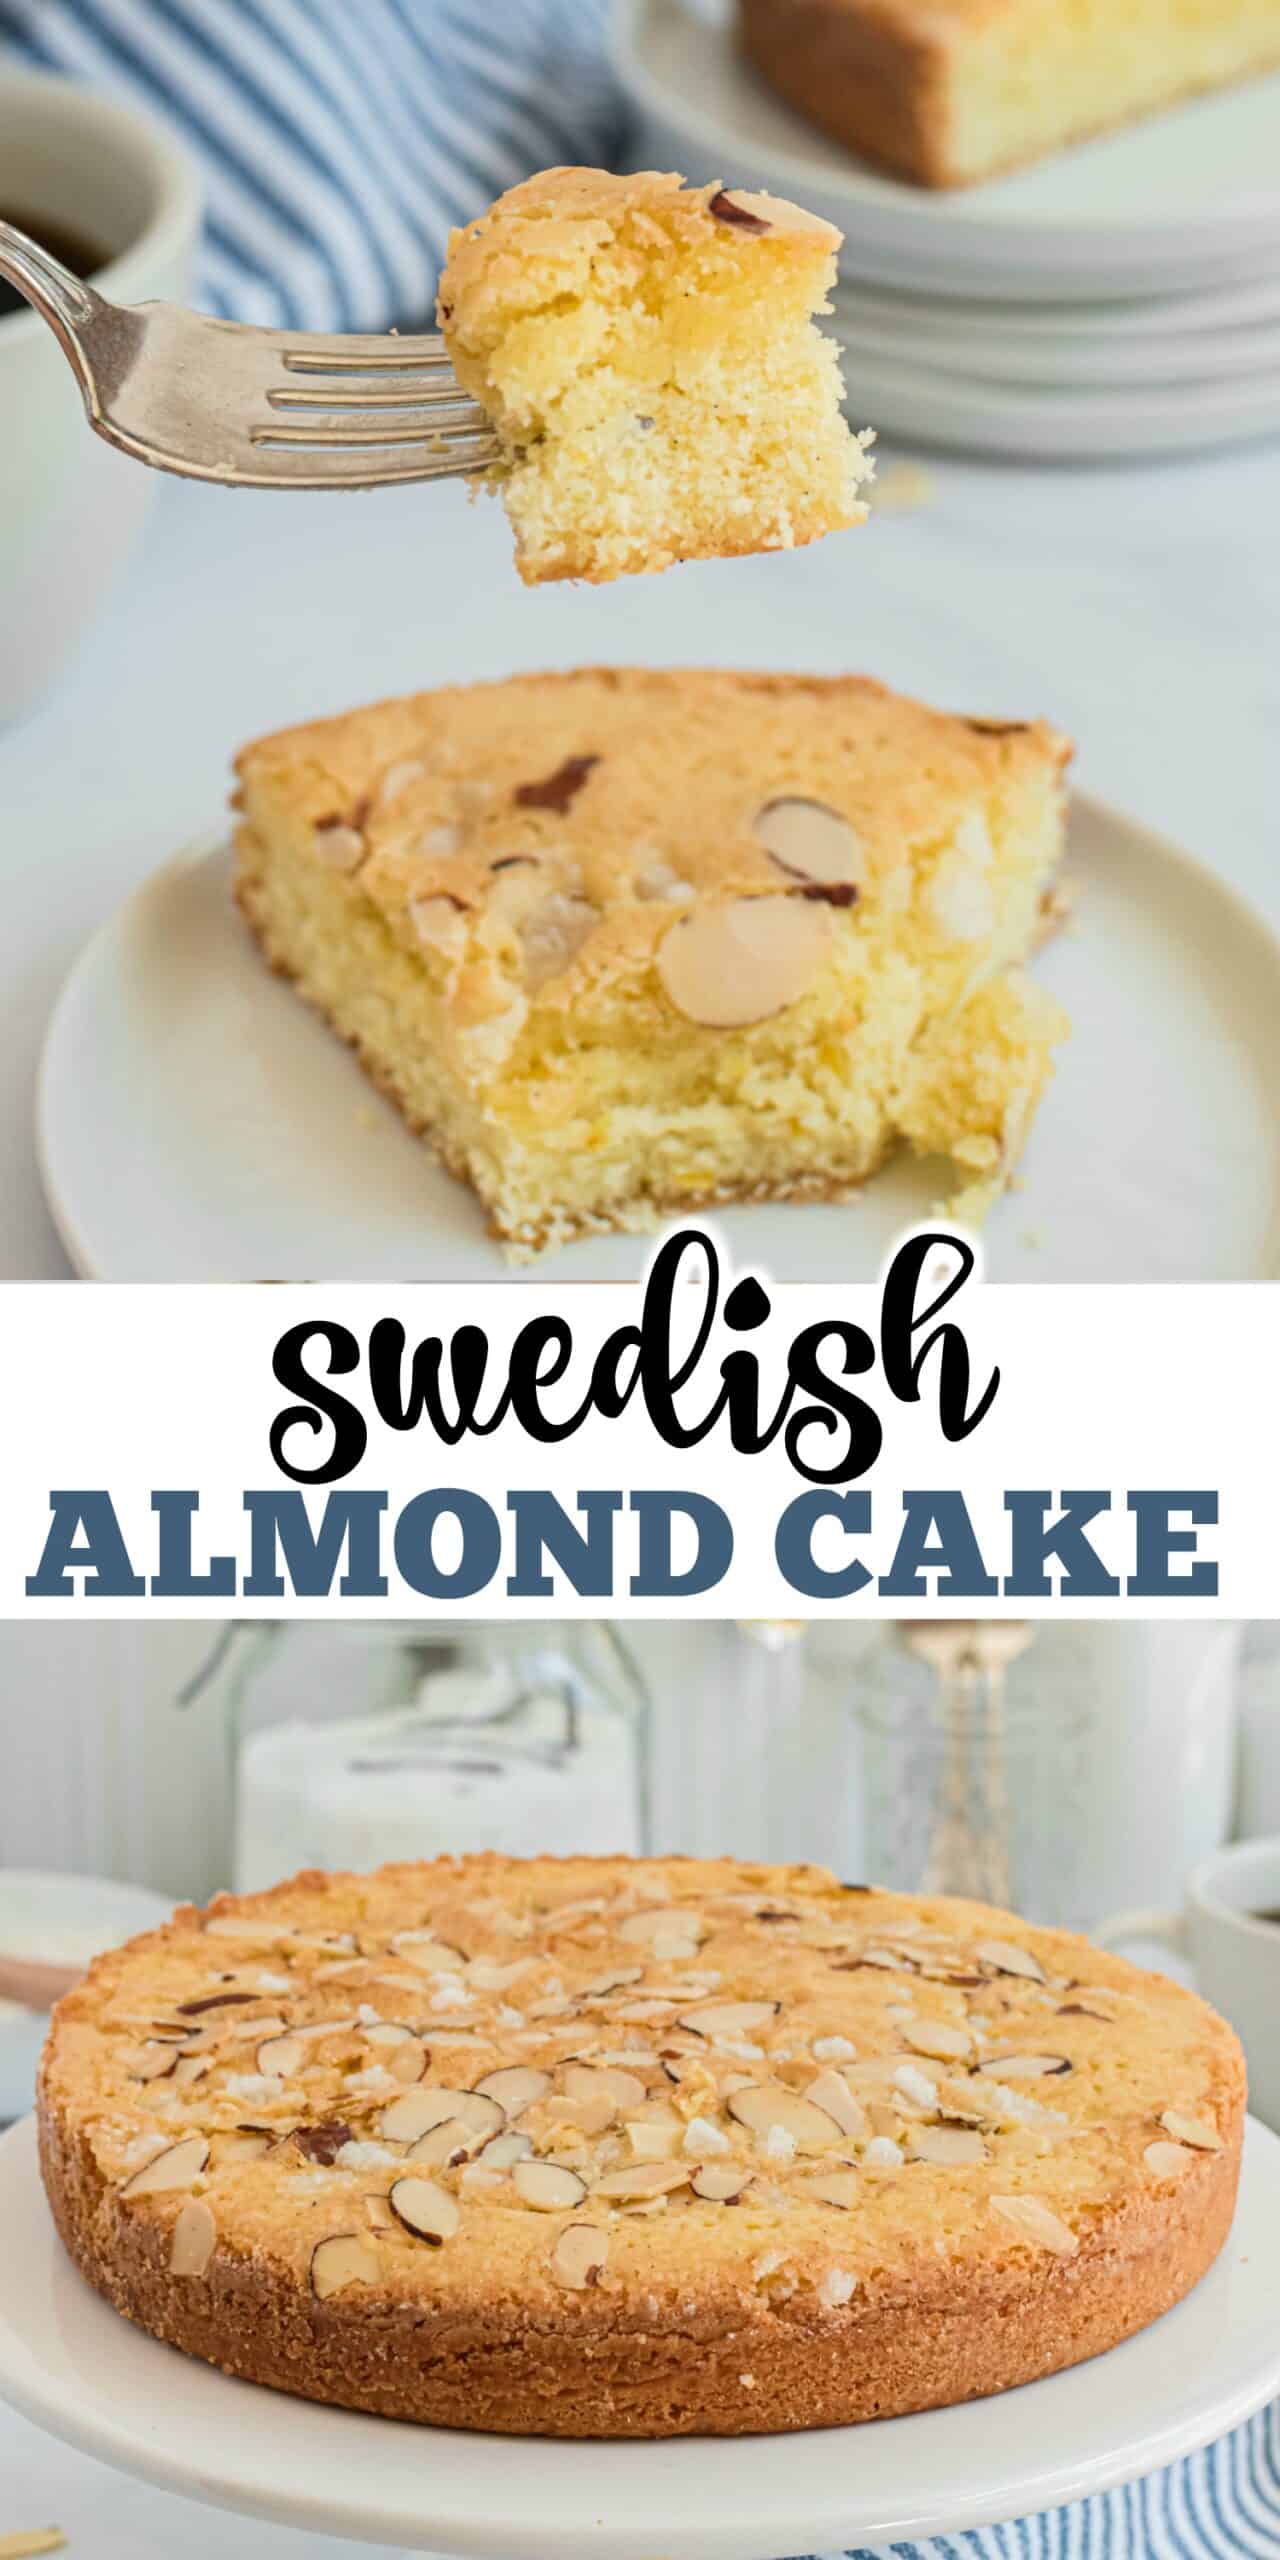 https://www.shugarysweets.com/wp-content/uploads/2020/02/swedish-almond-cake-22-scaled.jpg